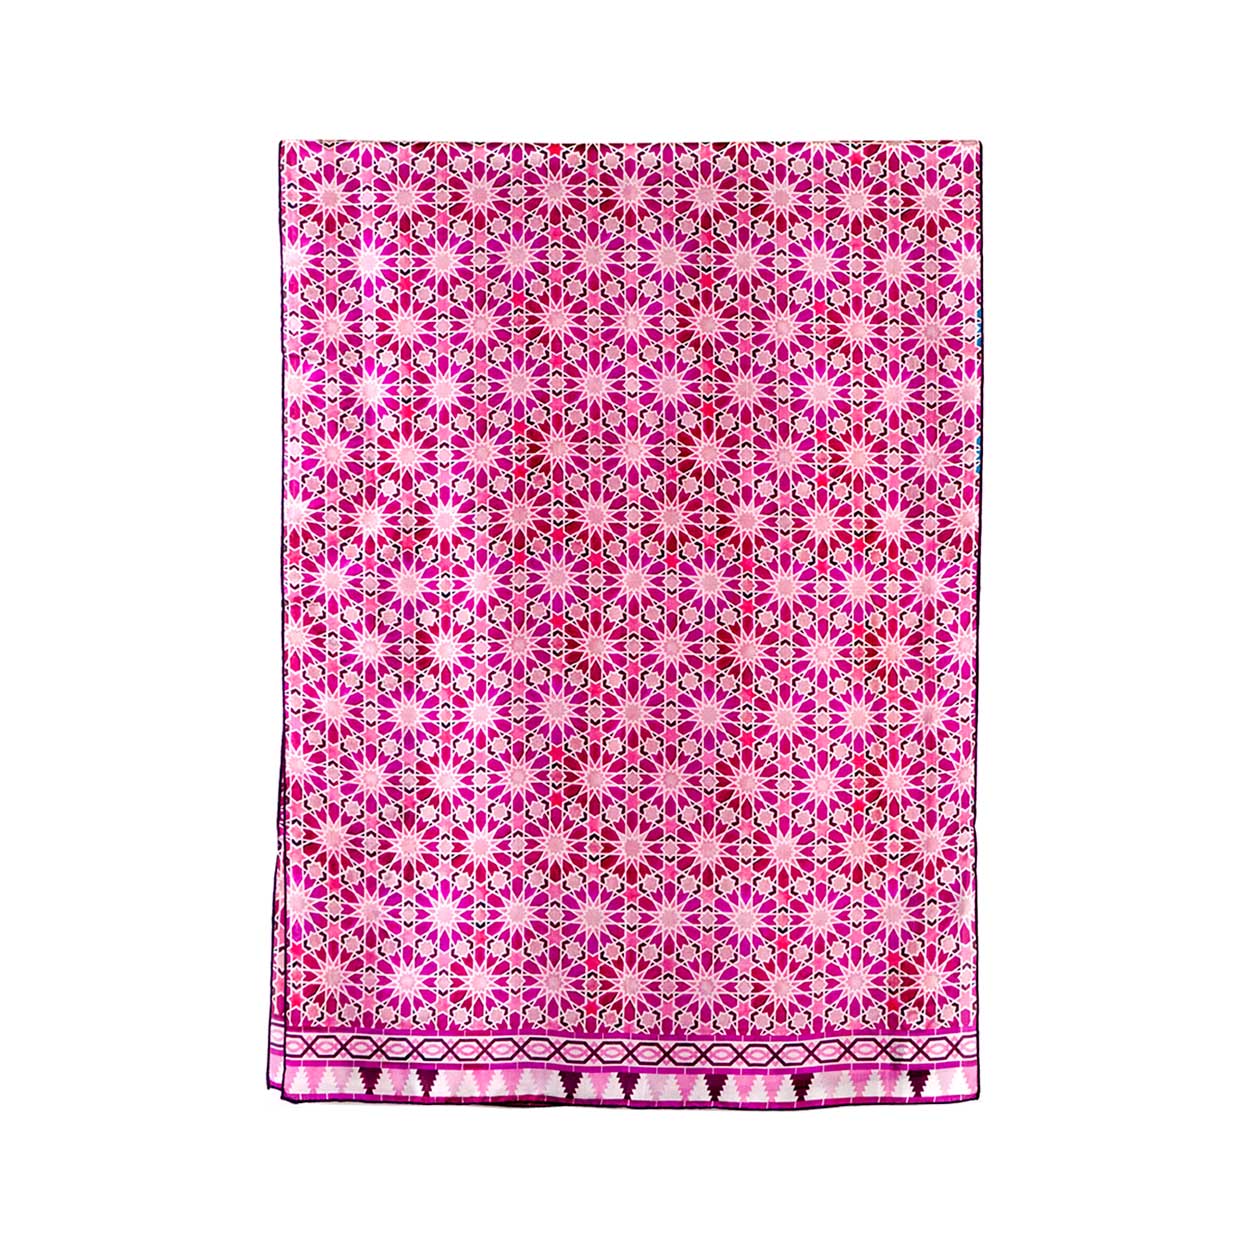 Large pink silk scarf with moorish tiles print